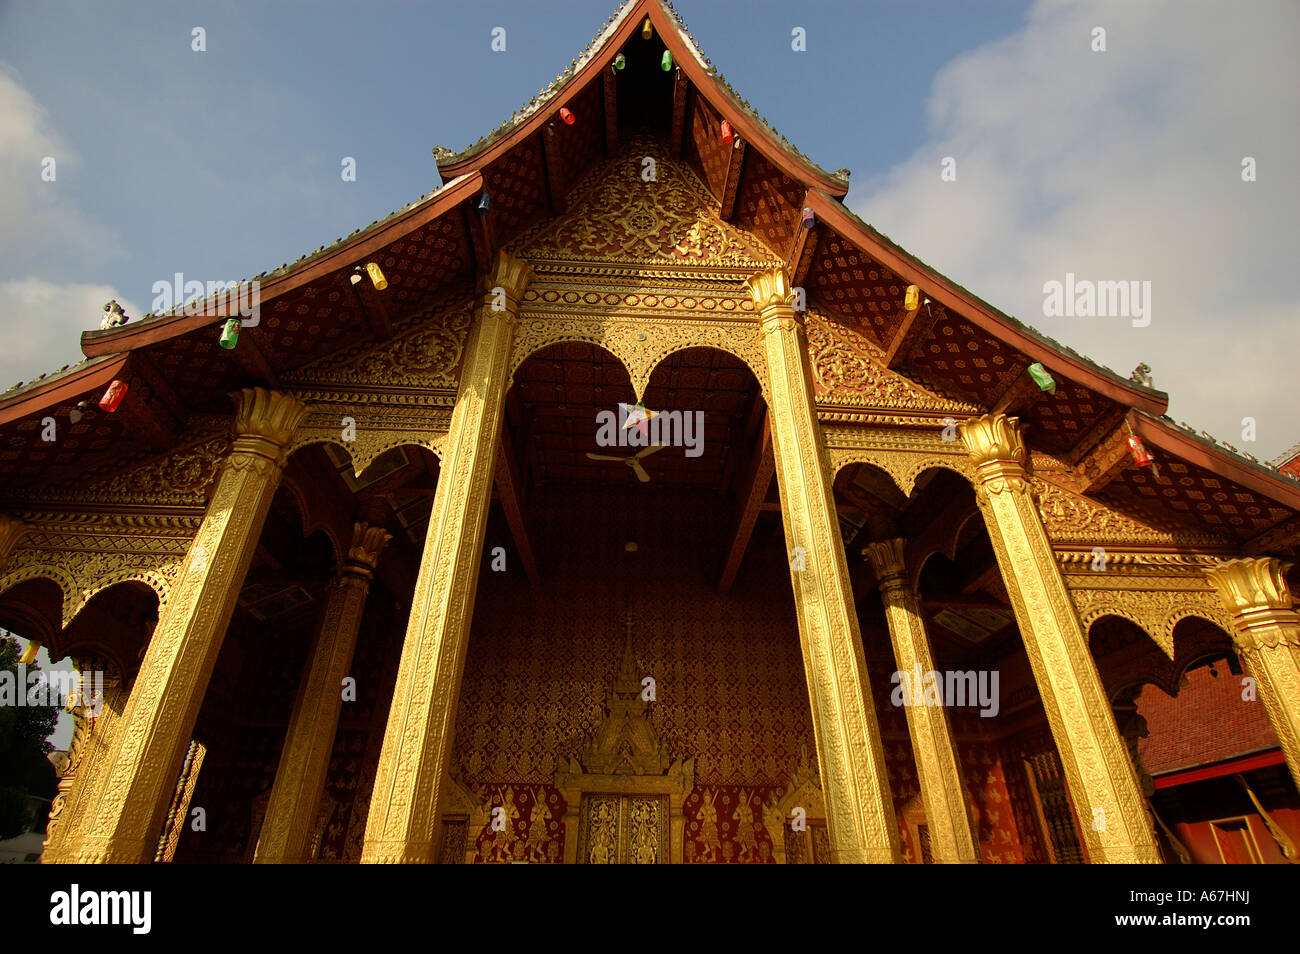 Wat Saen Buddhist temple, Luang Prabang, Laos (Lao PDR). Stock Photo